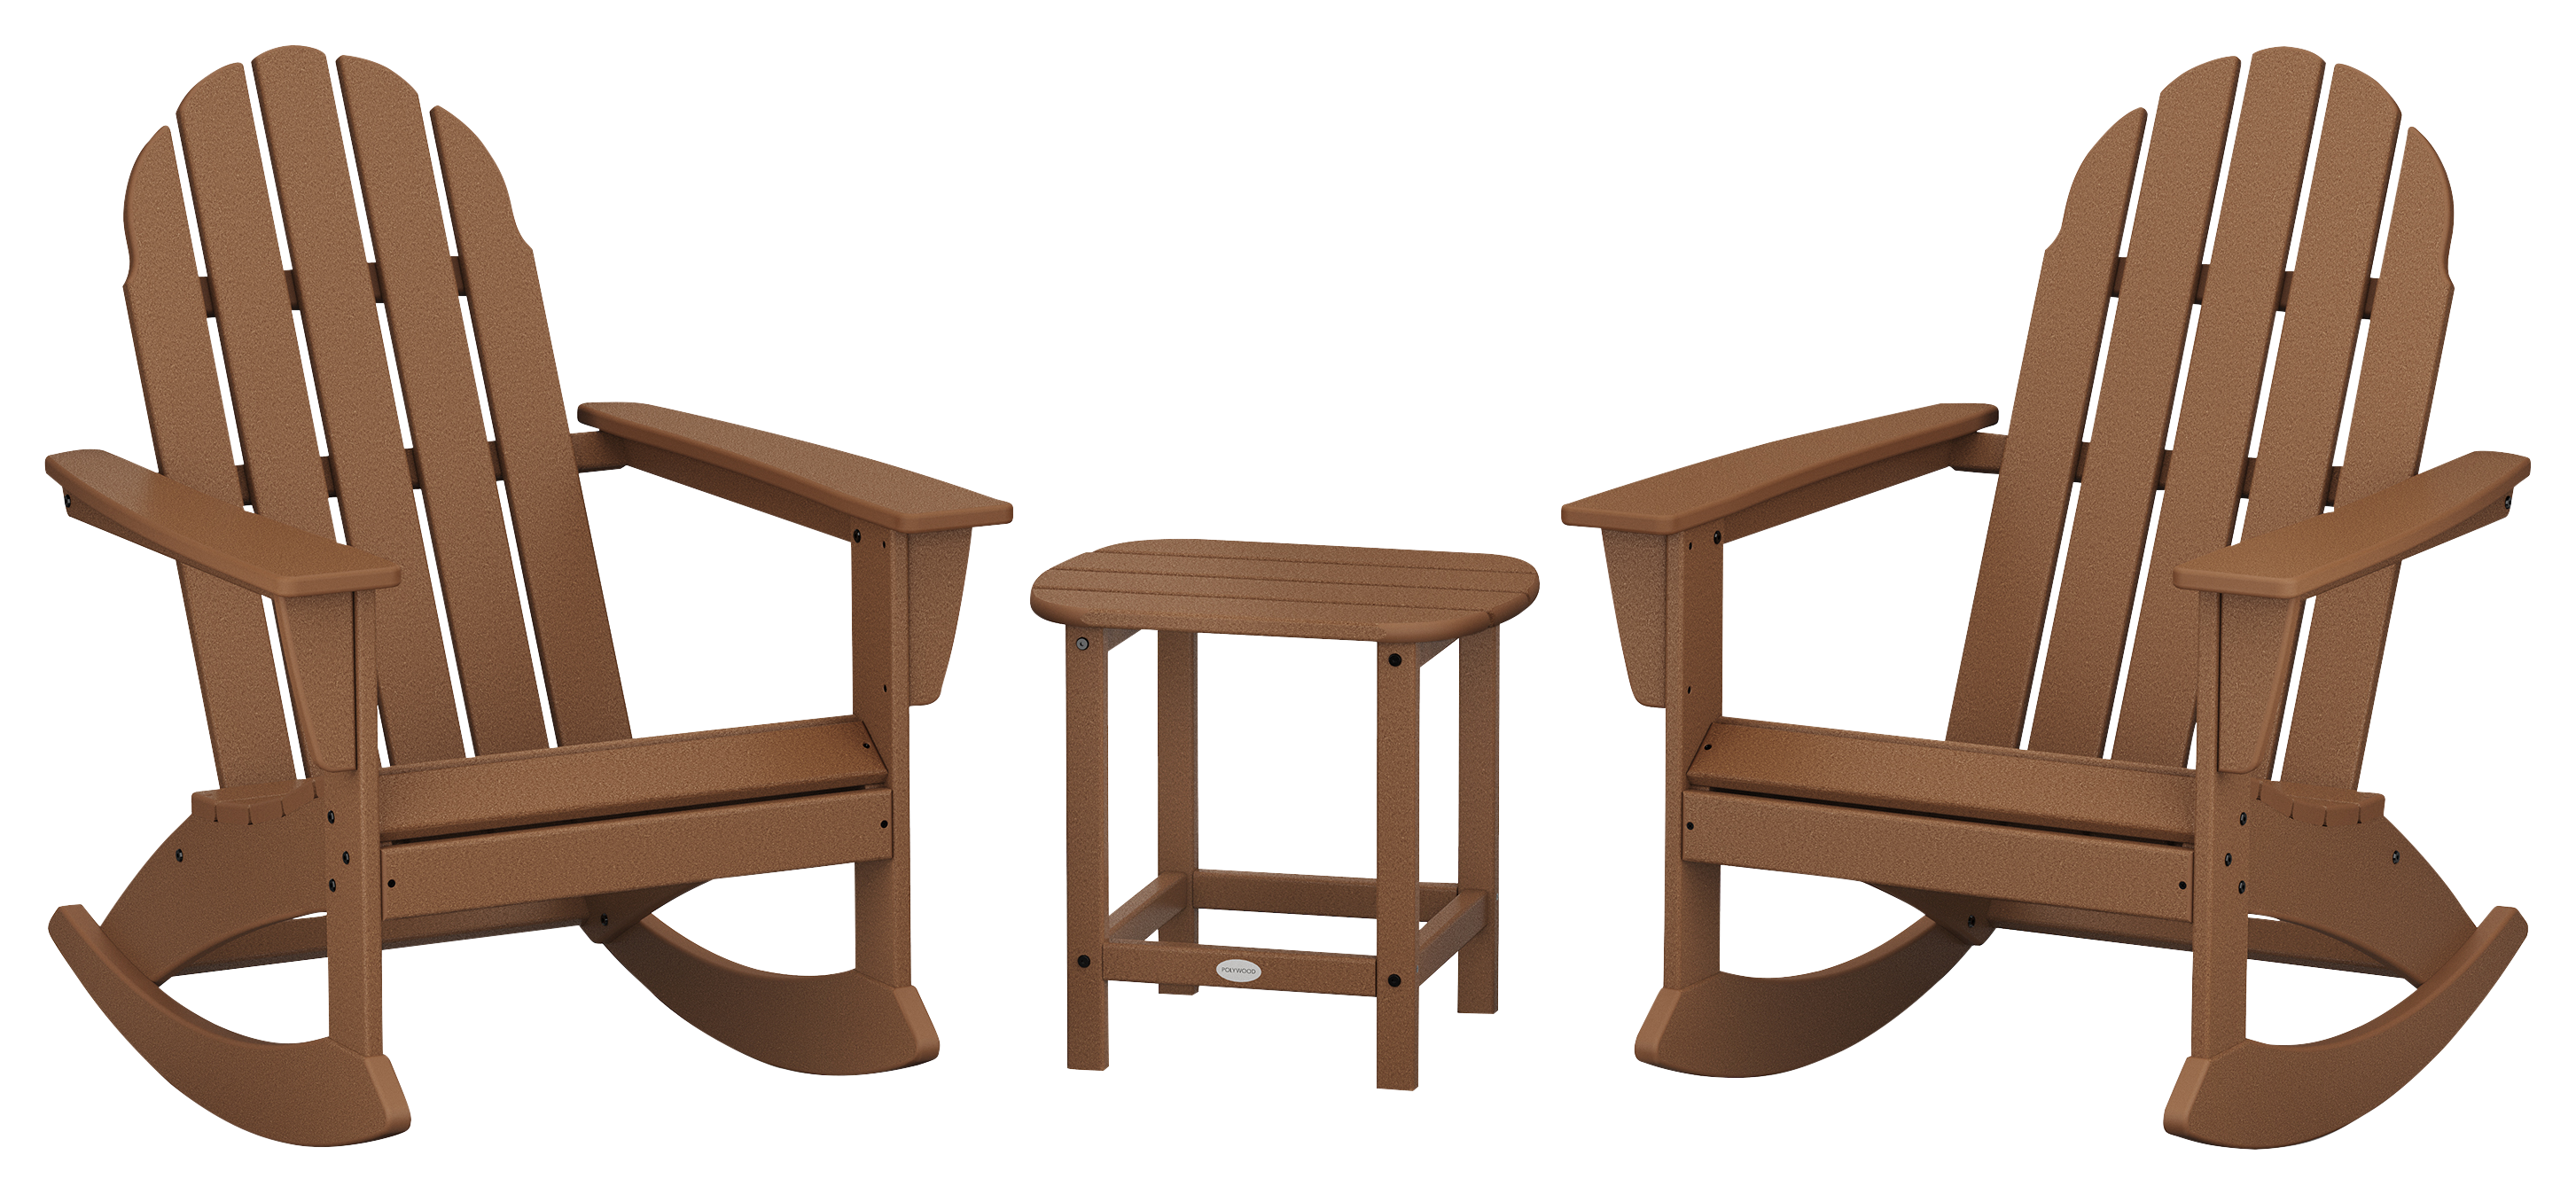 POLYWOOD Vineyard 3-Piece Adirondack Rocking Chair Set with South Beach Side Table - Teak